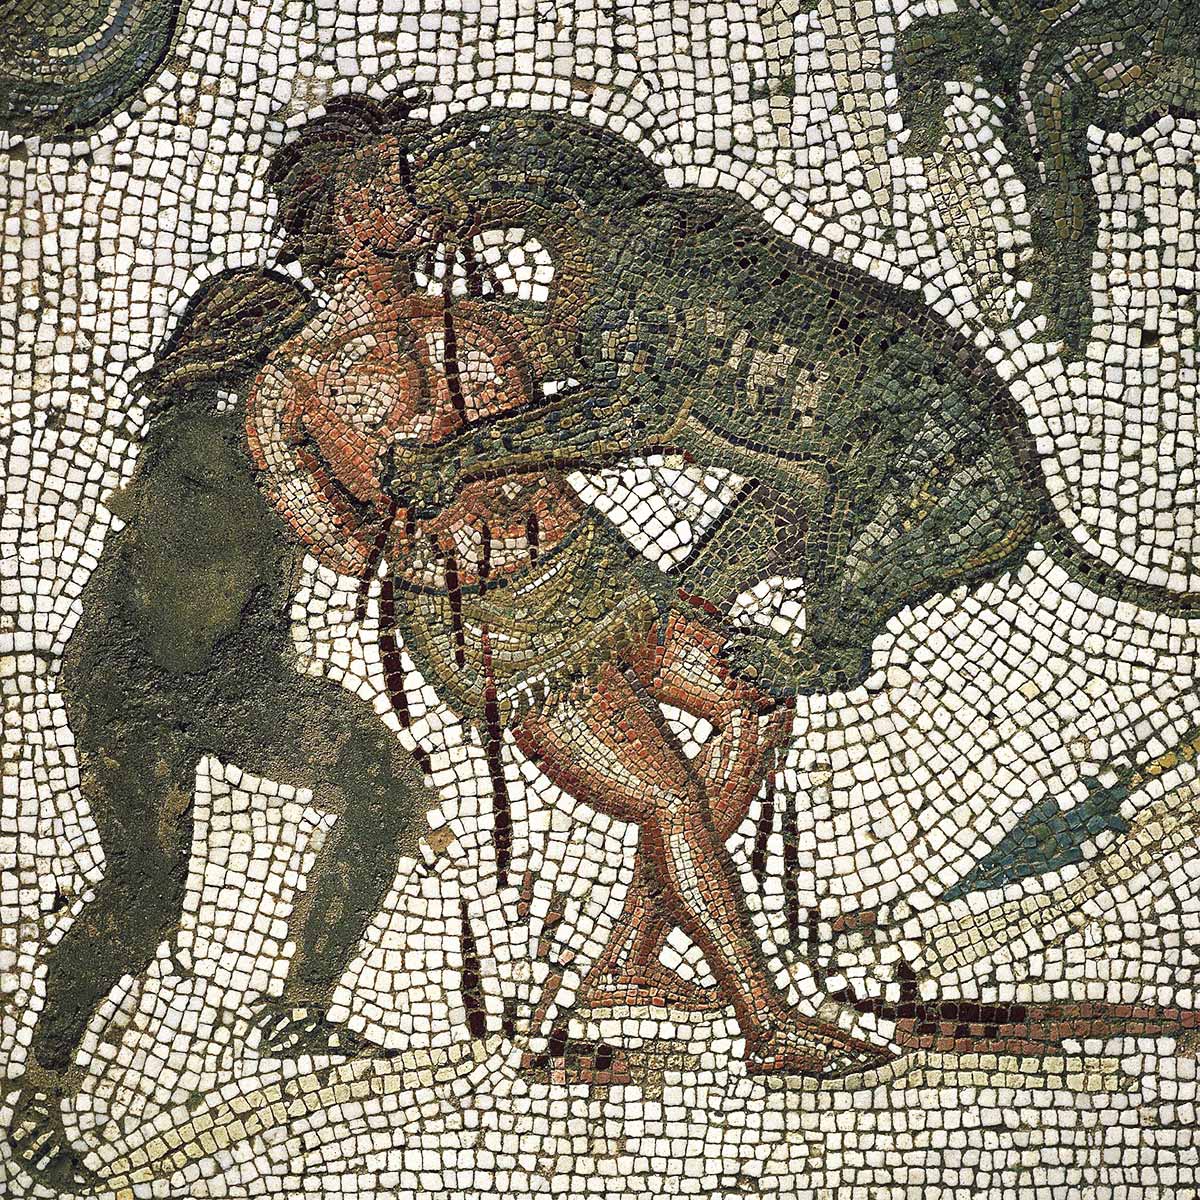 Mosaic, 2nd century AD
El-Jem Archaeological Museum, Tunisia